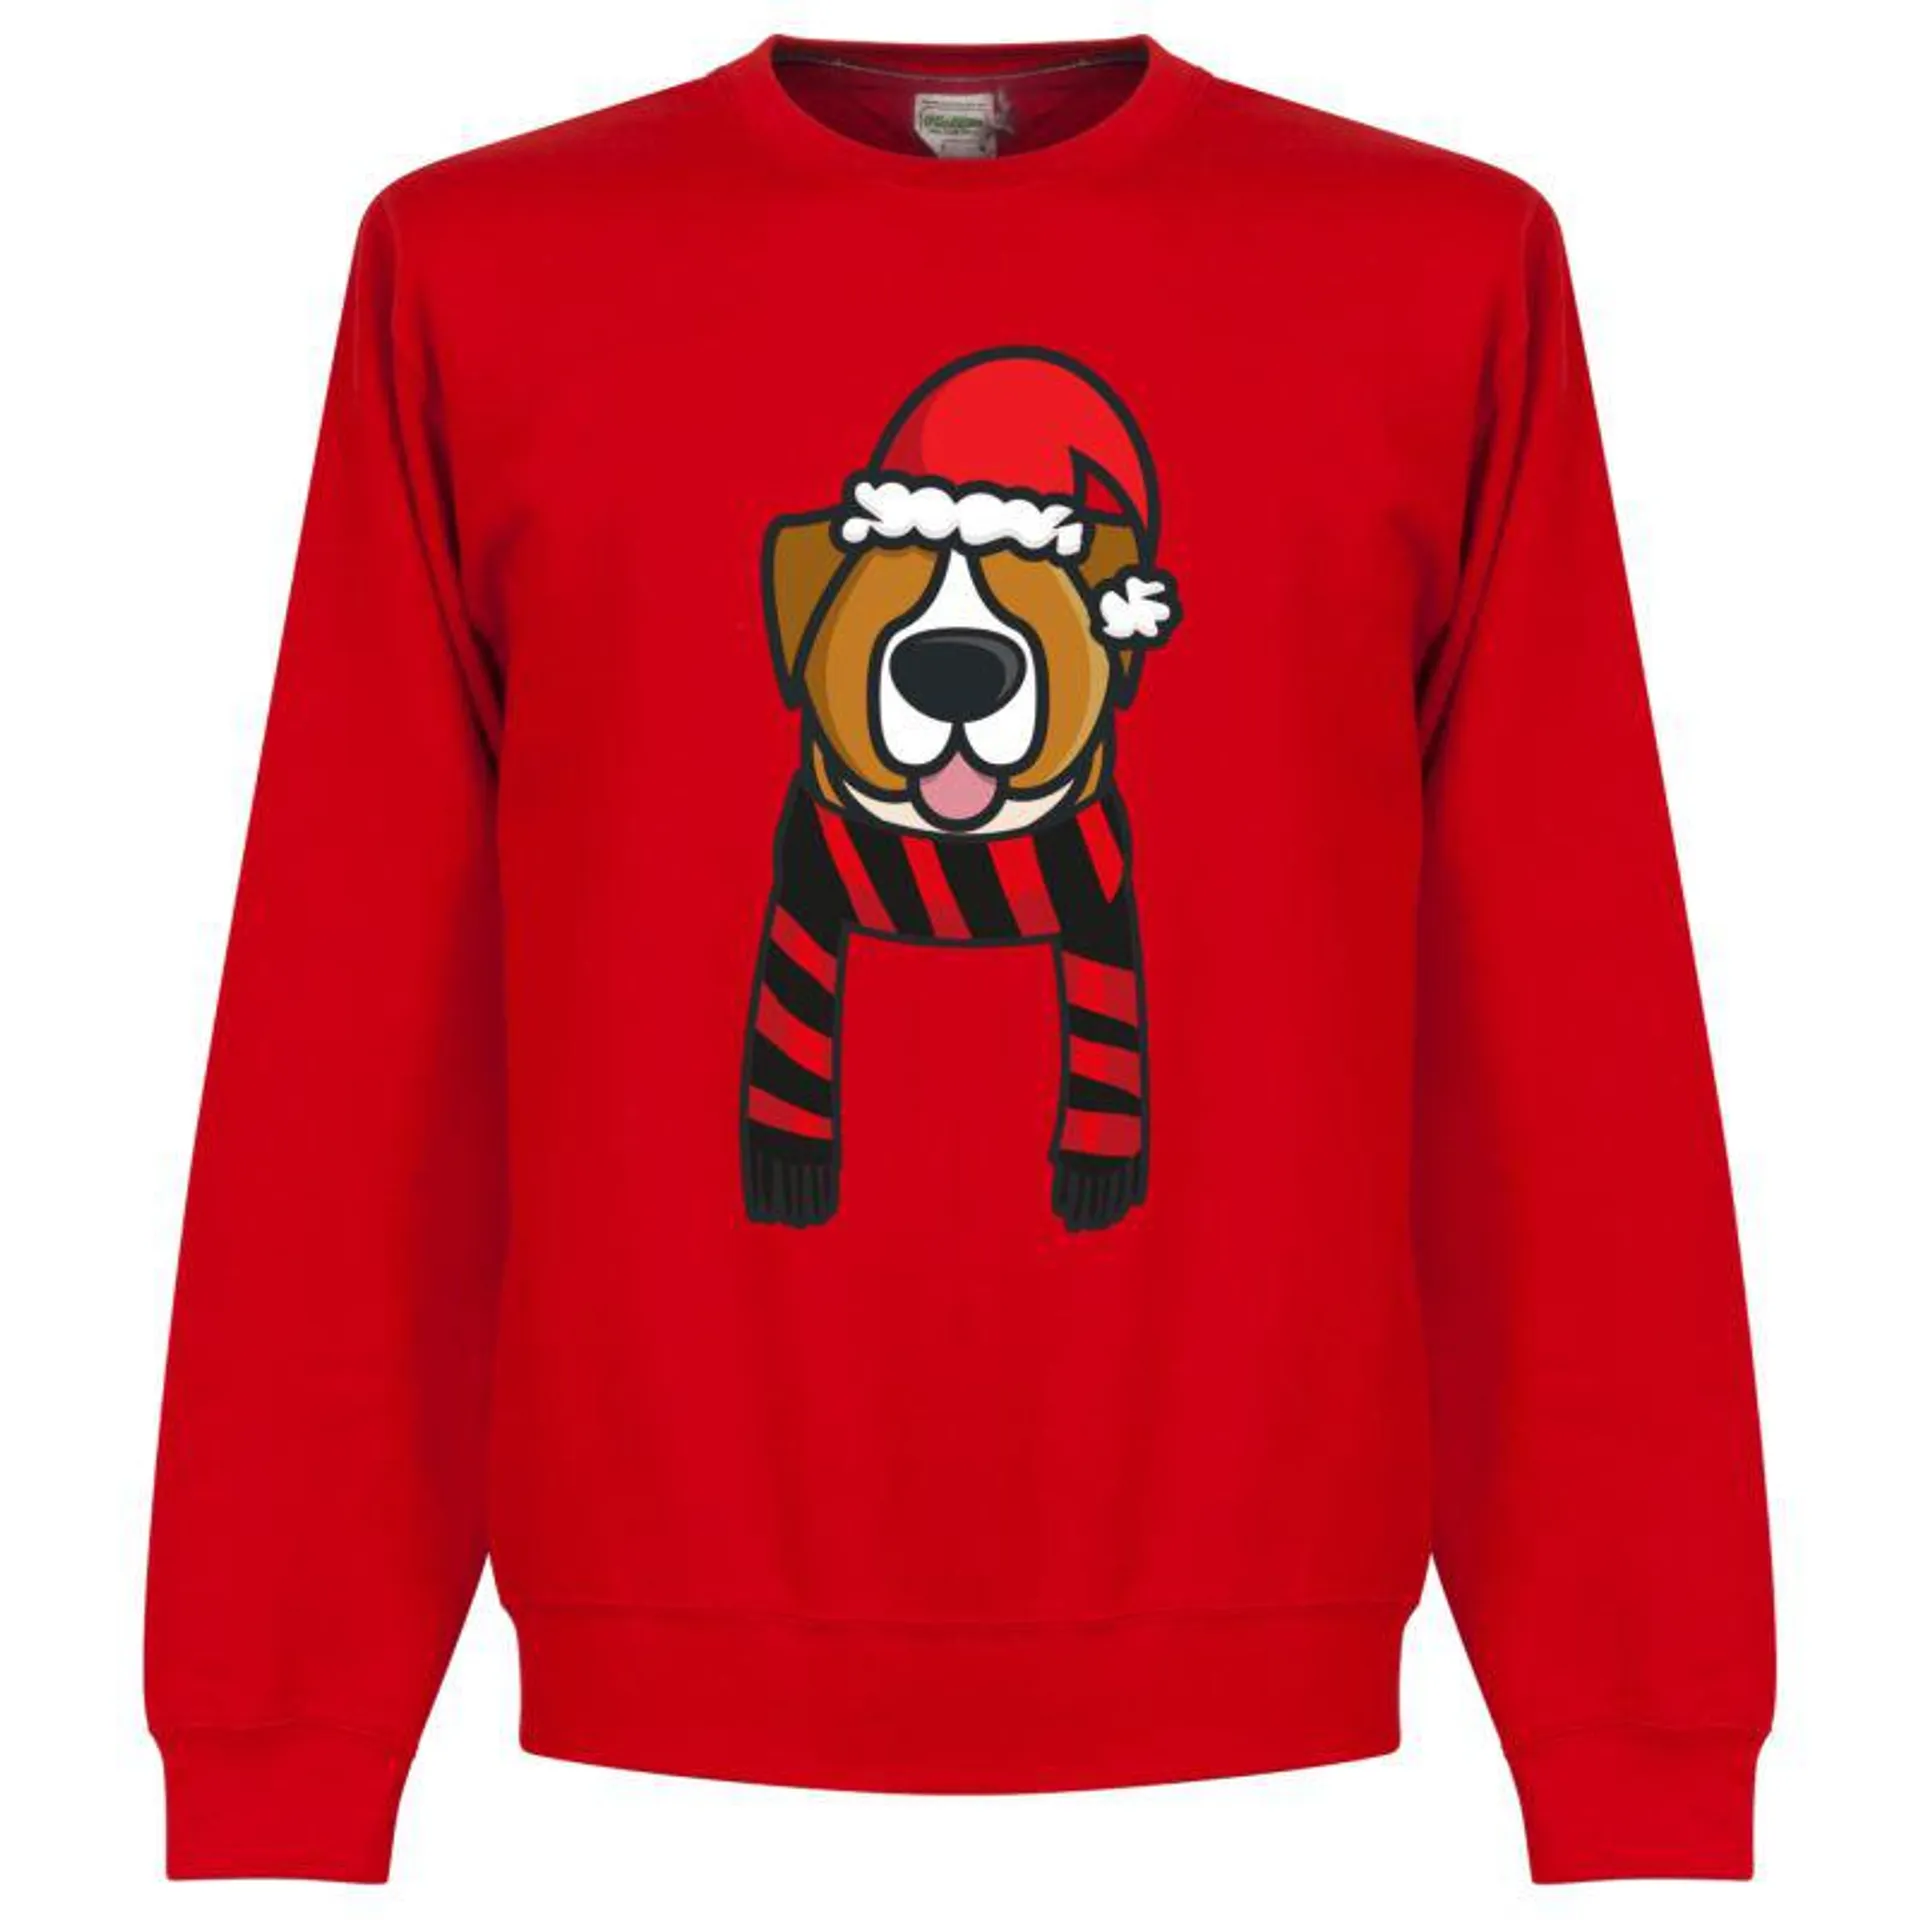 Christmas Dog Sweatshirt - Red (Red/Black Scarf)